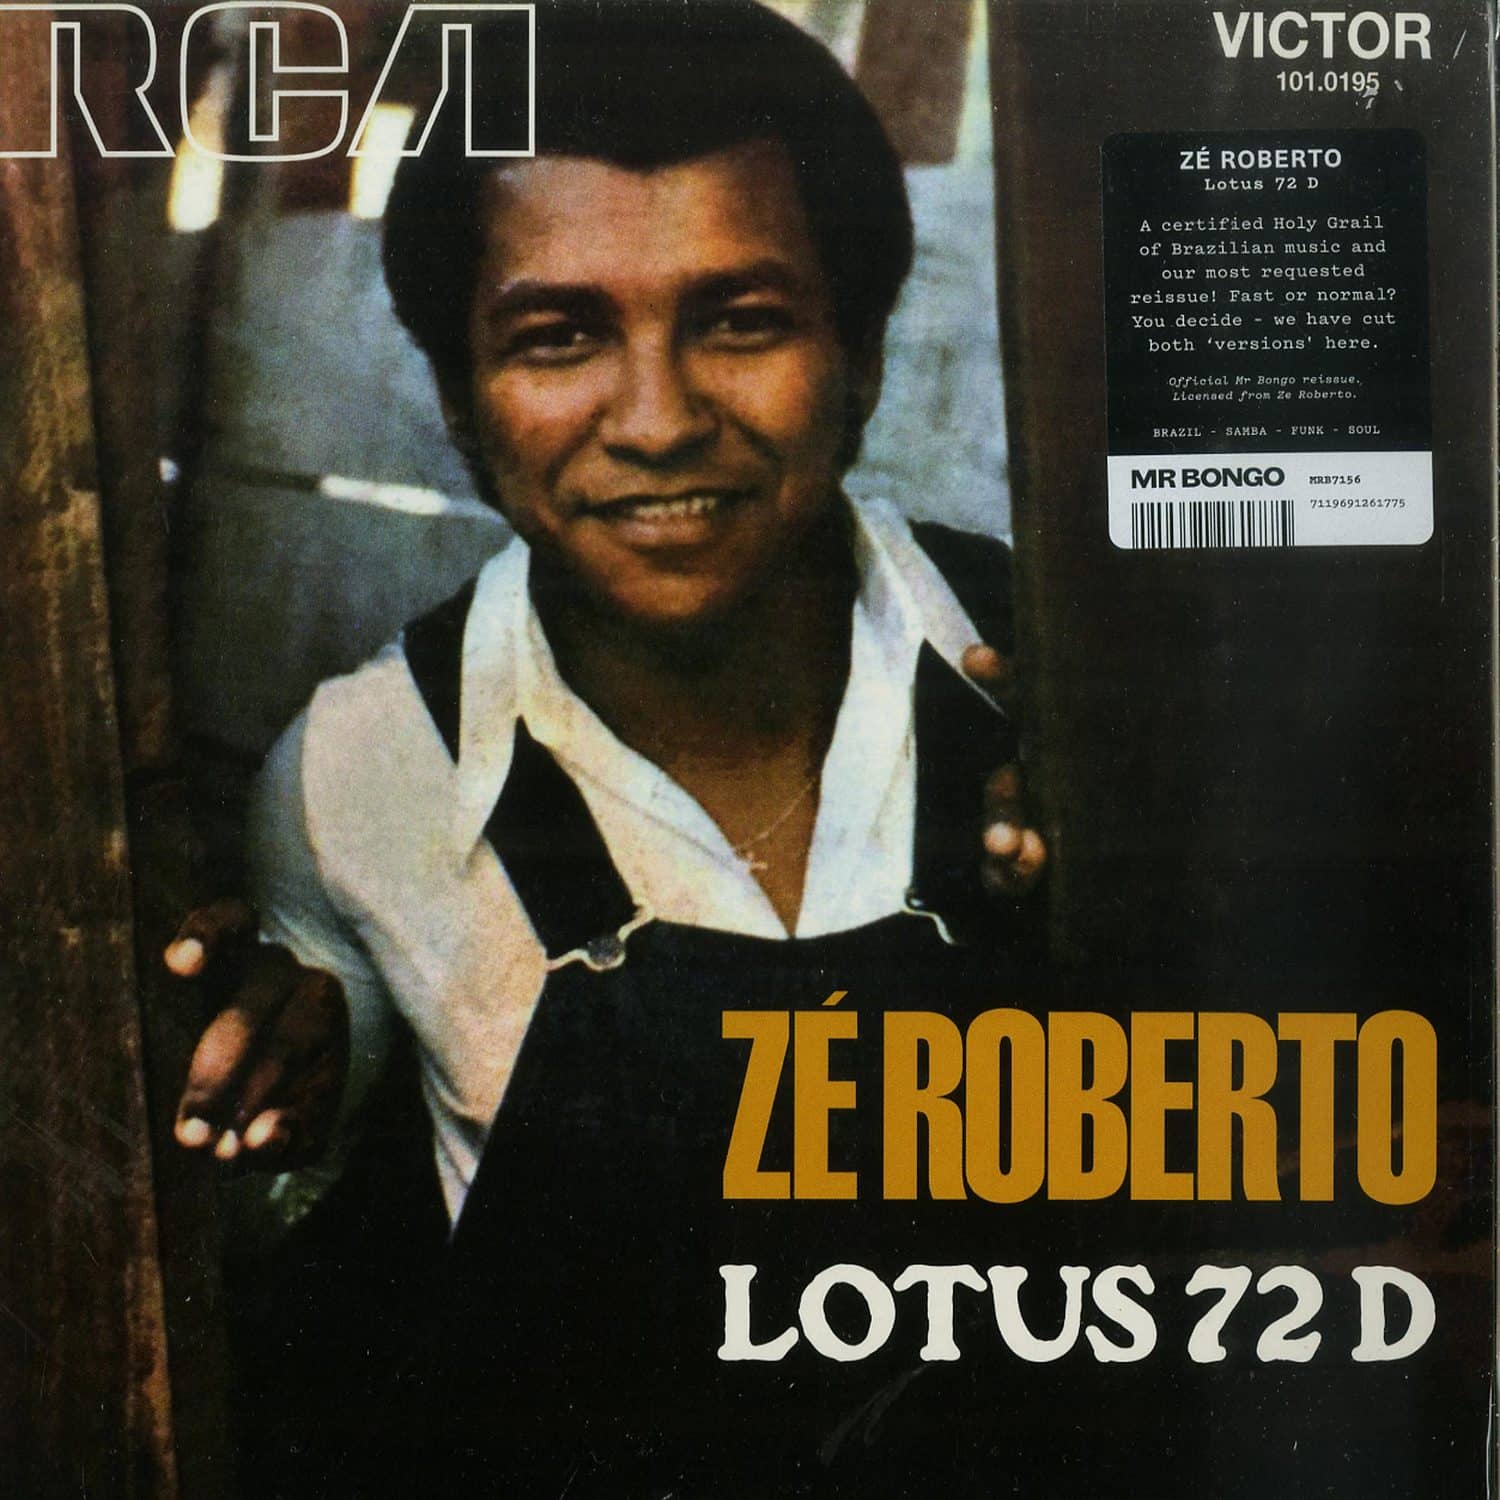 Ze Roberto - LOTUS 72 D 